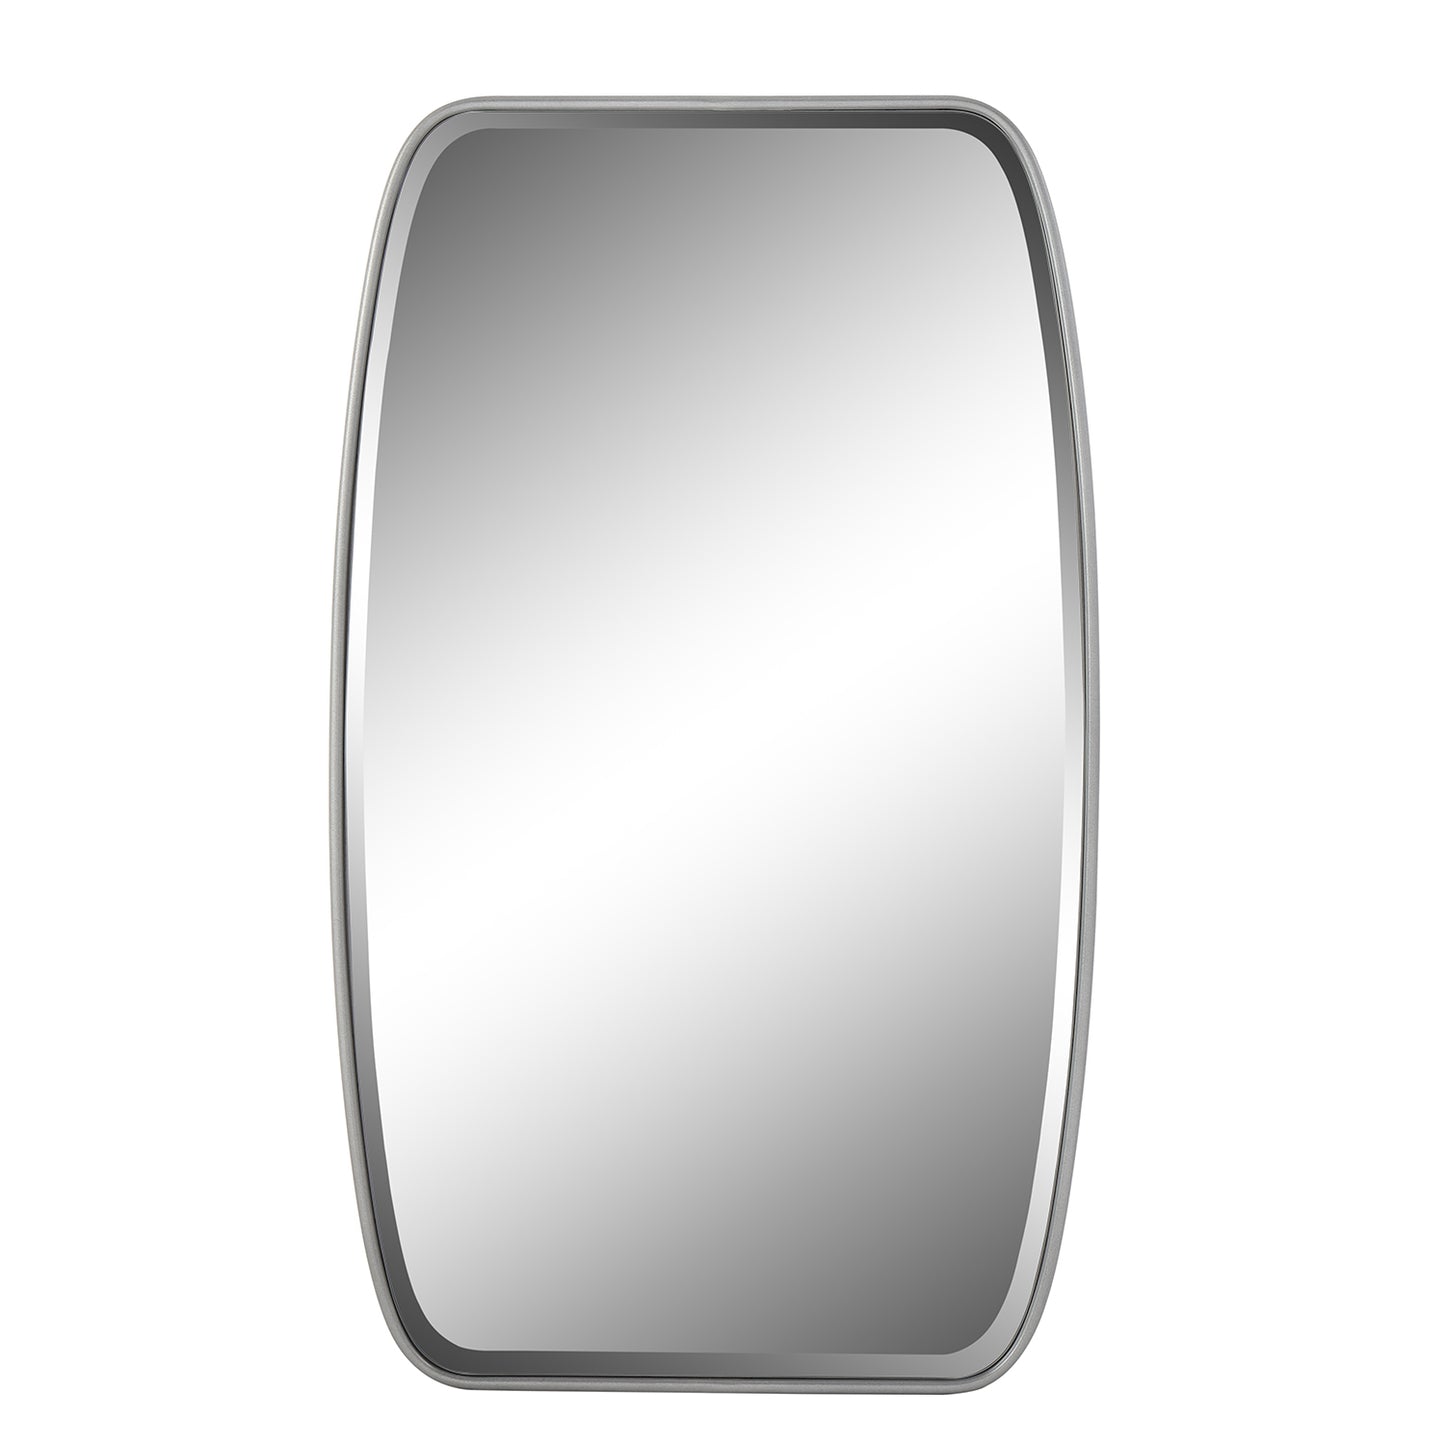 MacLuu Oval Angled Beveled Wall Mirror